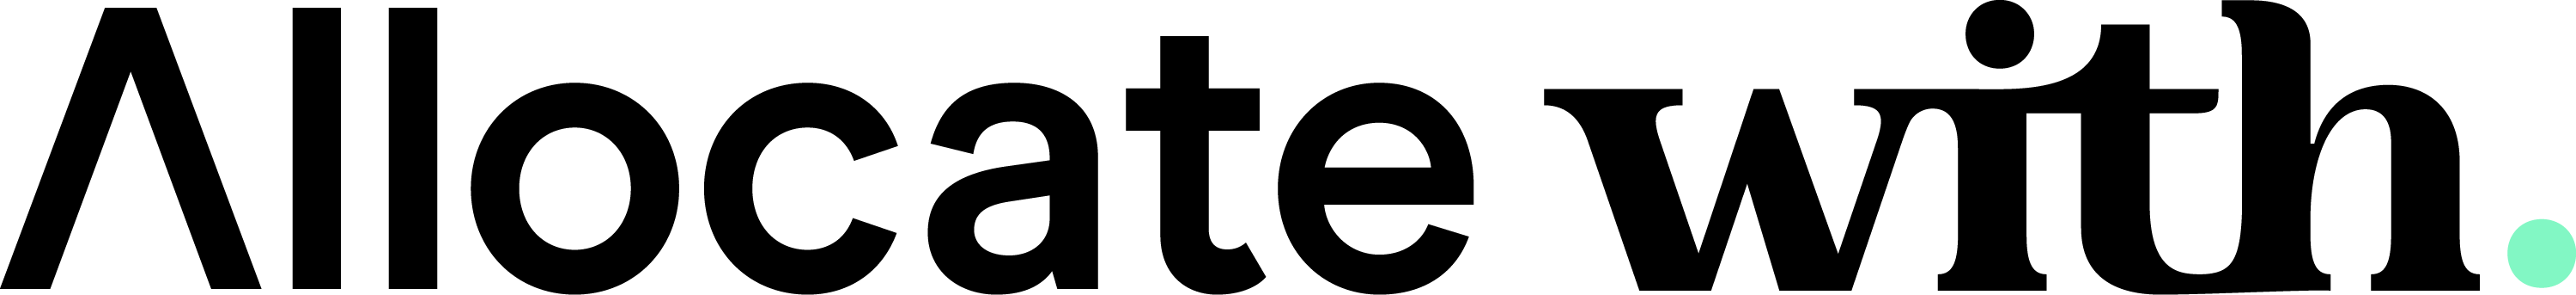 Allocate With Logo in Black